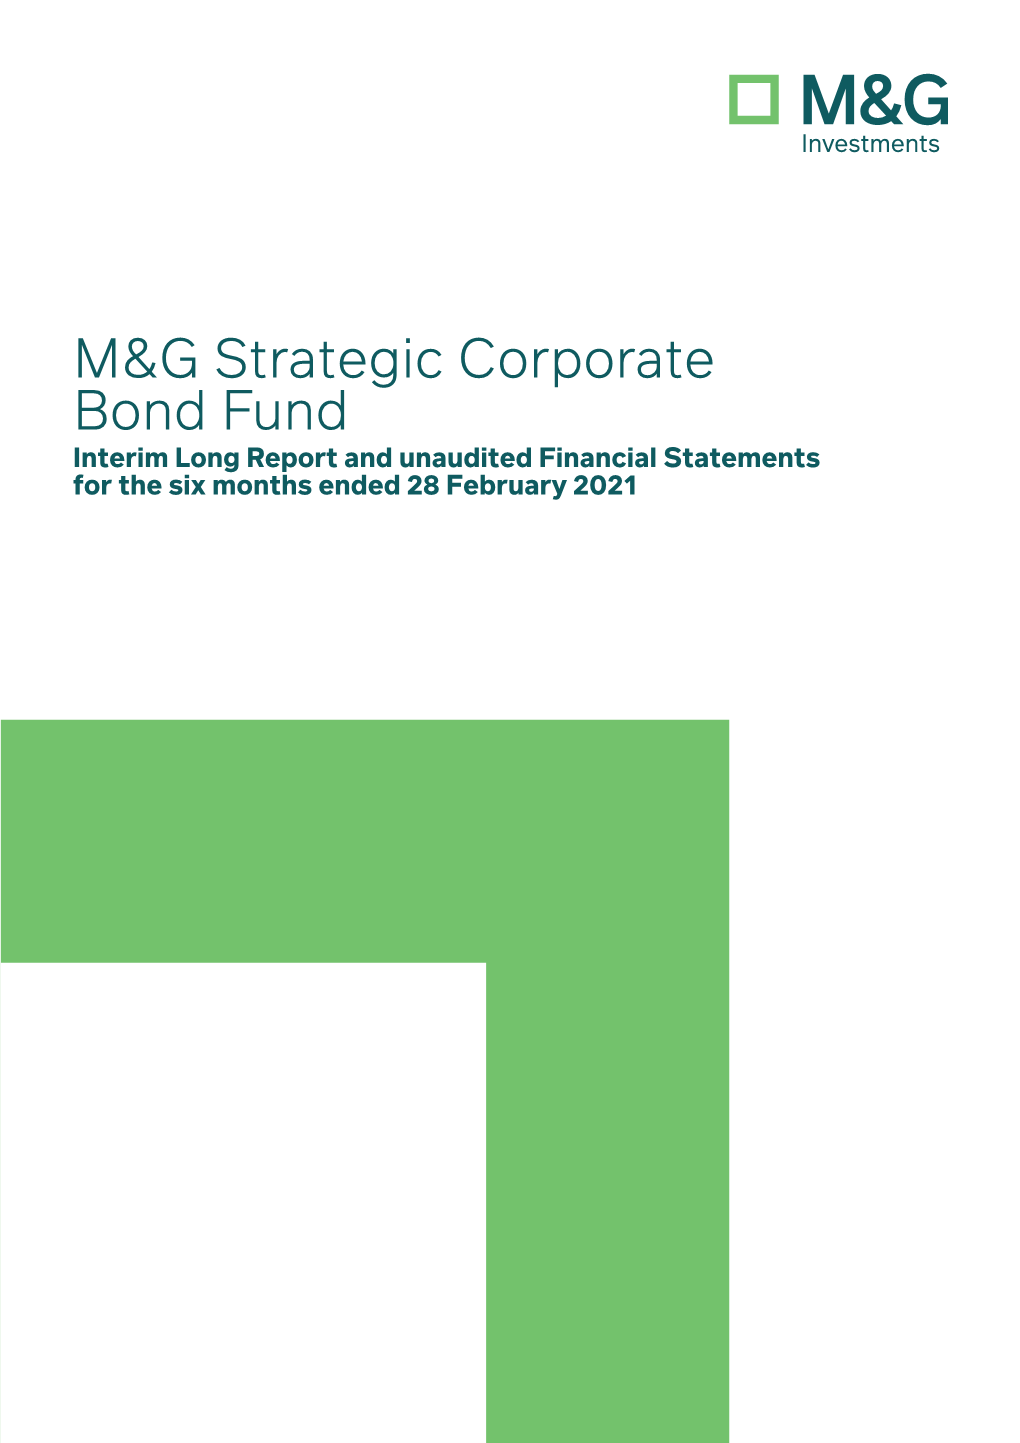 M&G Strategic Corporate Bond Fund